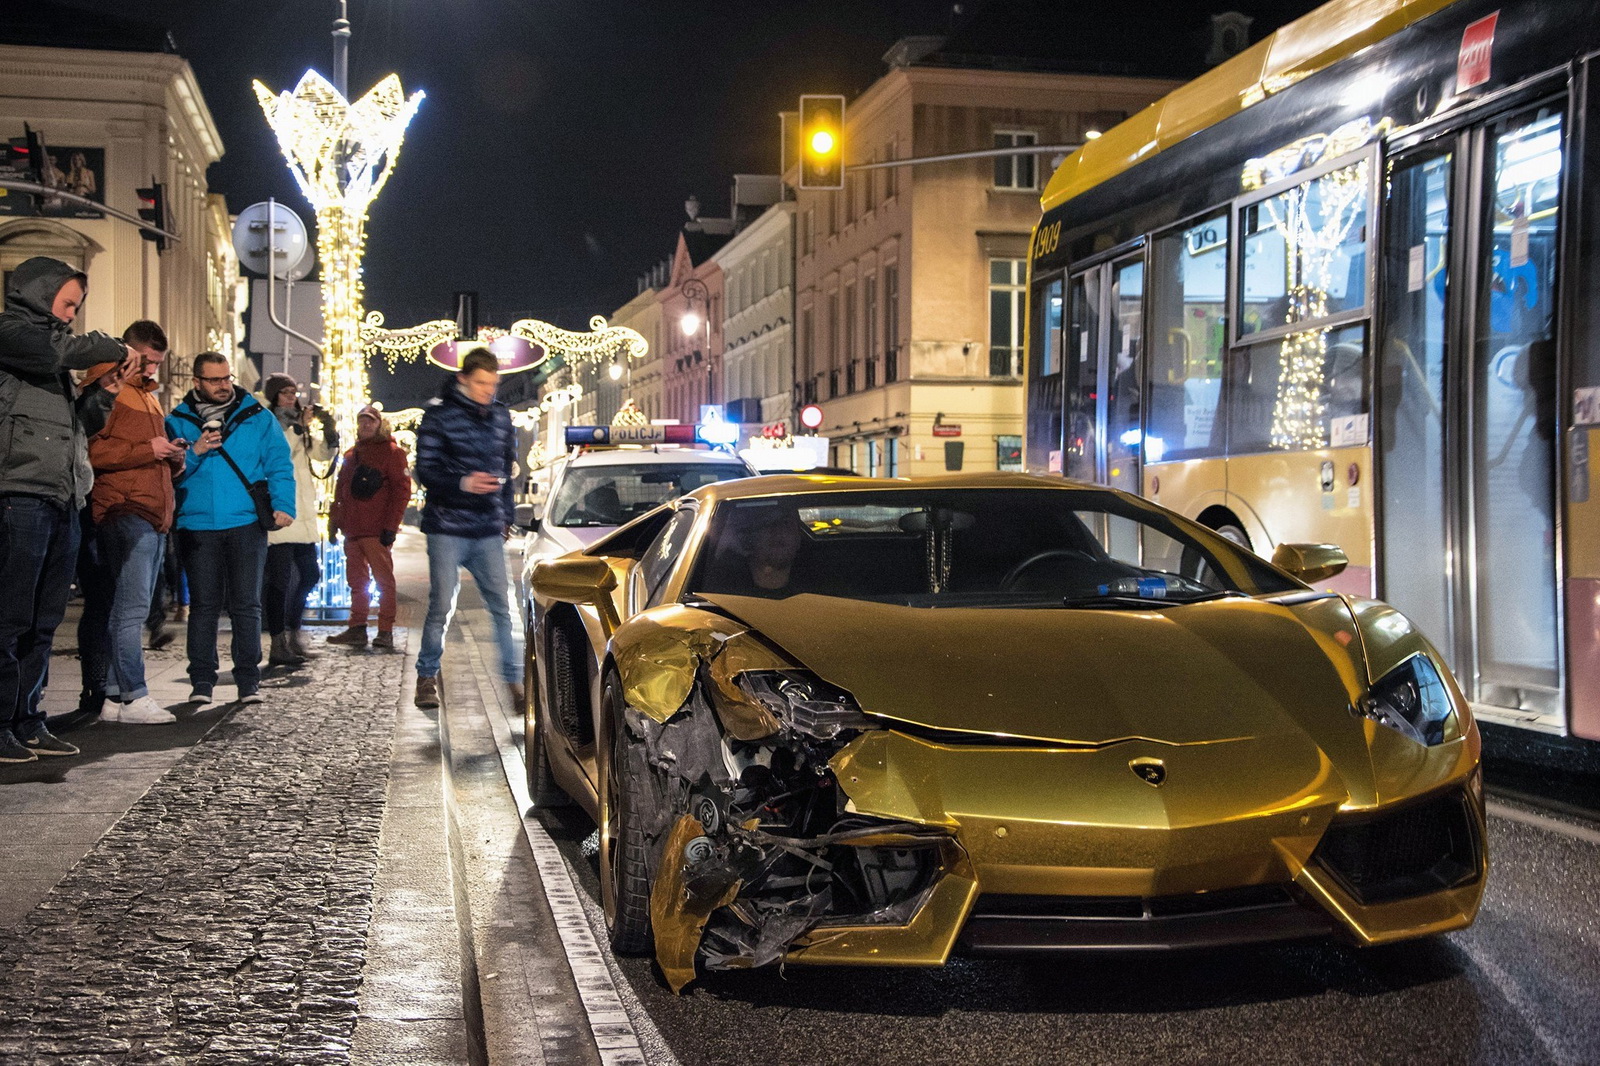 Gold Chrome Lamborghini Aventador Bites The Dust In Poland | Carscoops1600 x 1066